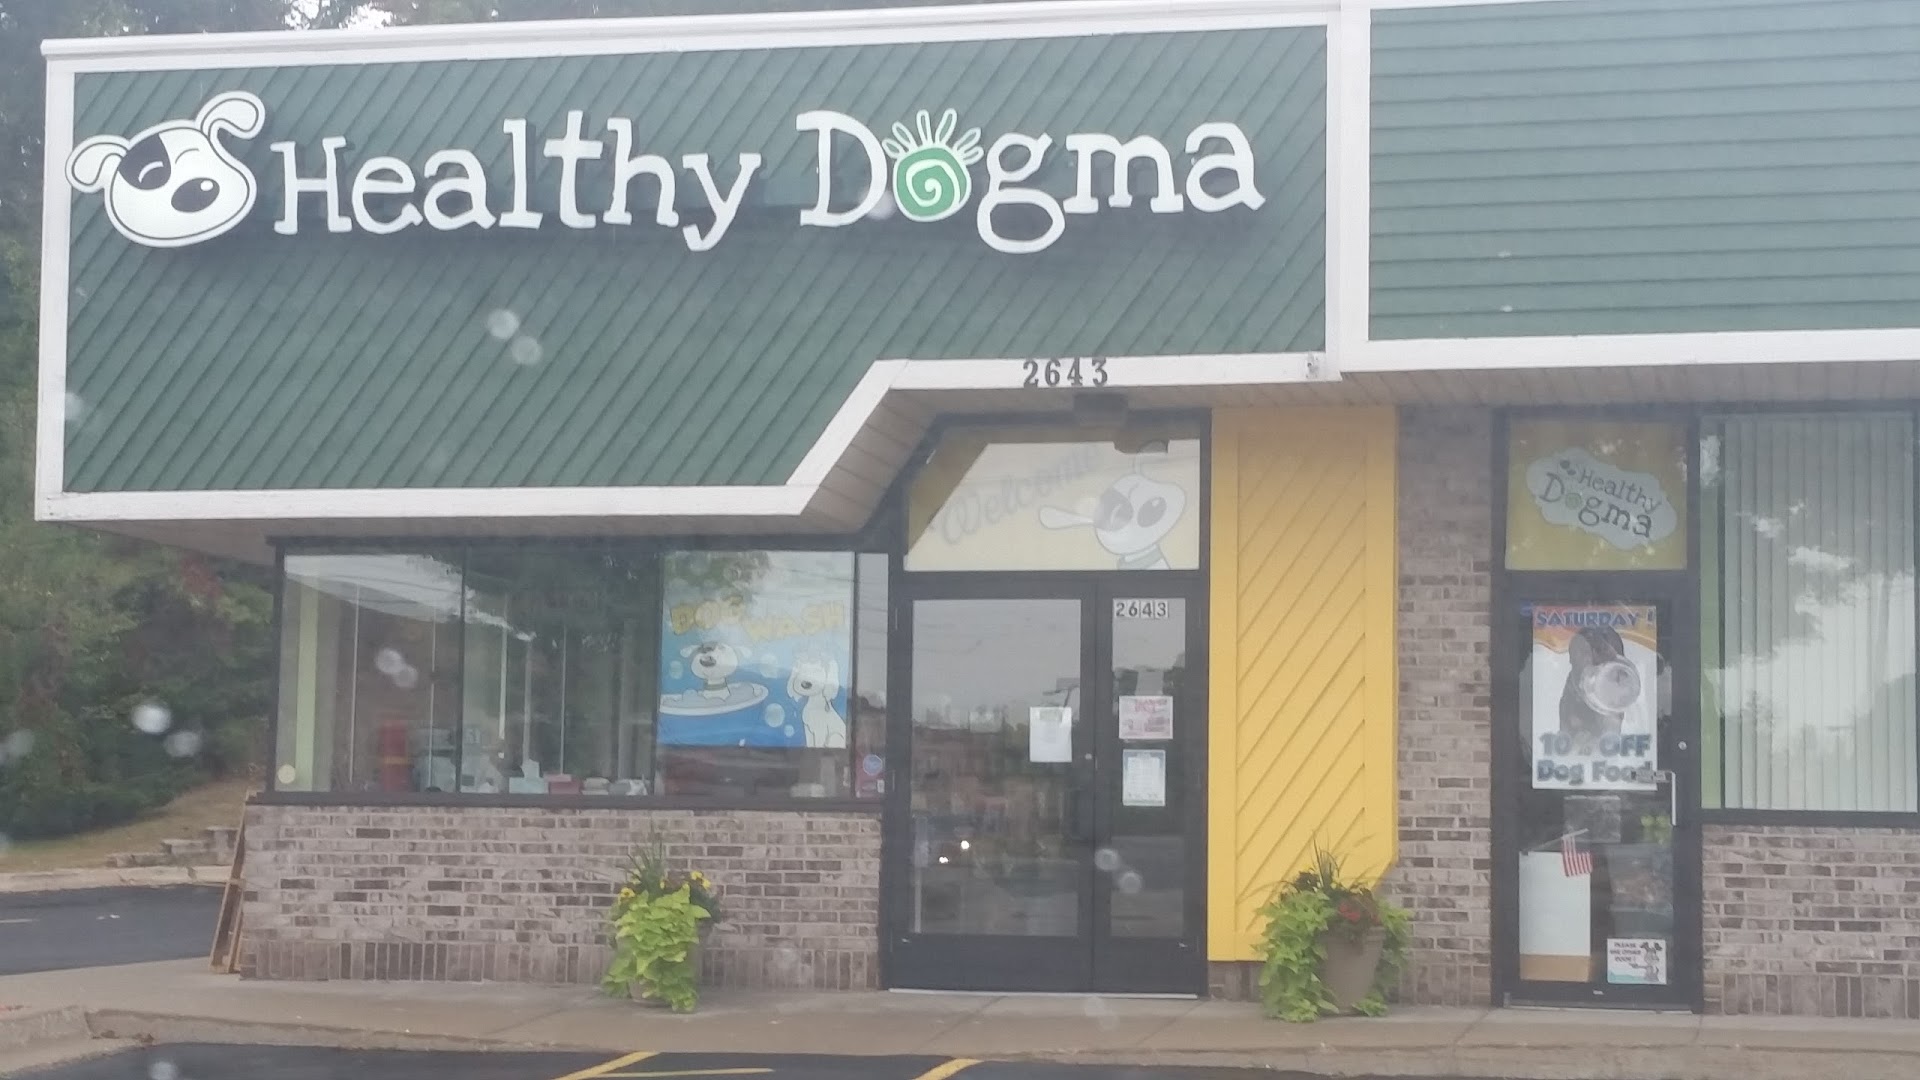 Healthy Dogma, Inc